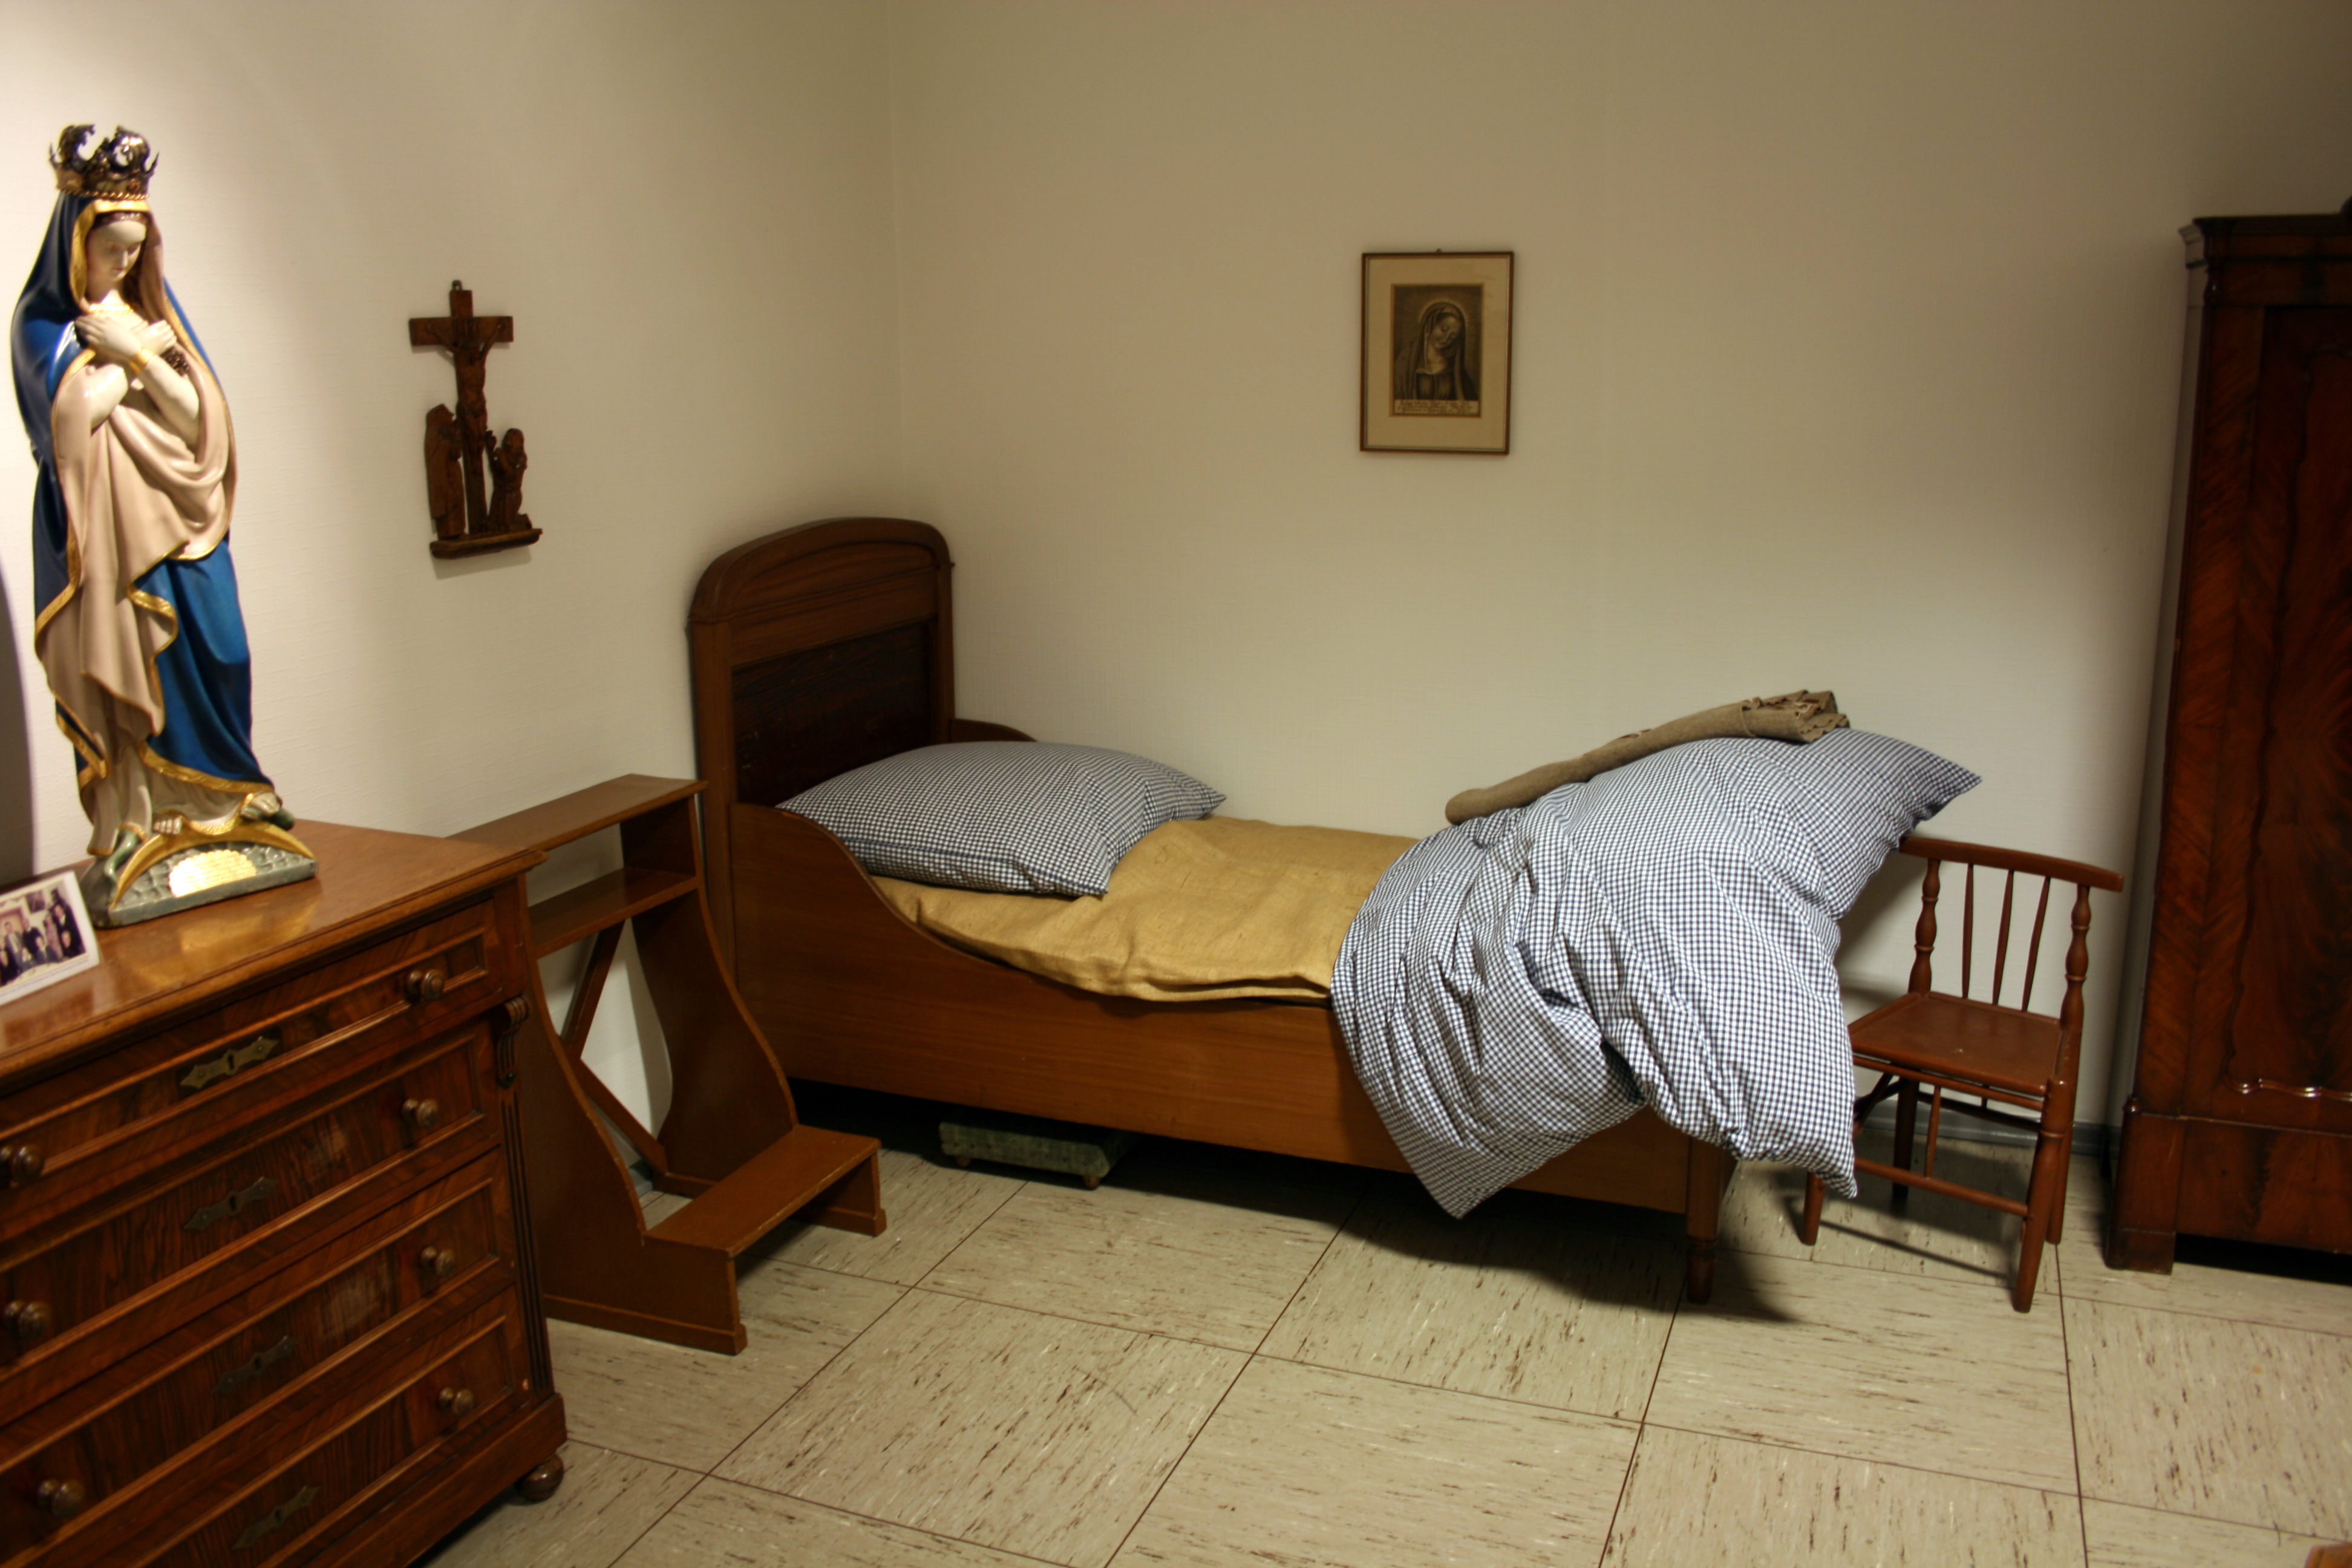 Franziskanerinnen-Kloster-Bett der Maria Theresia